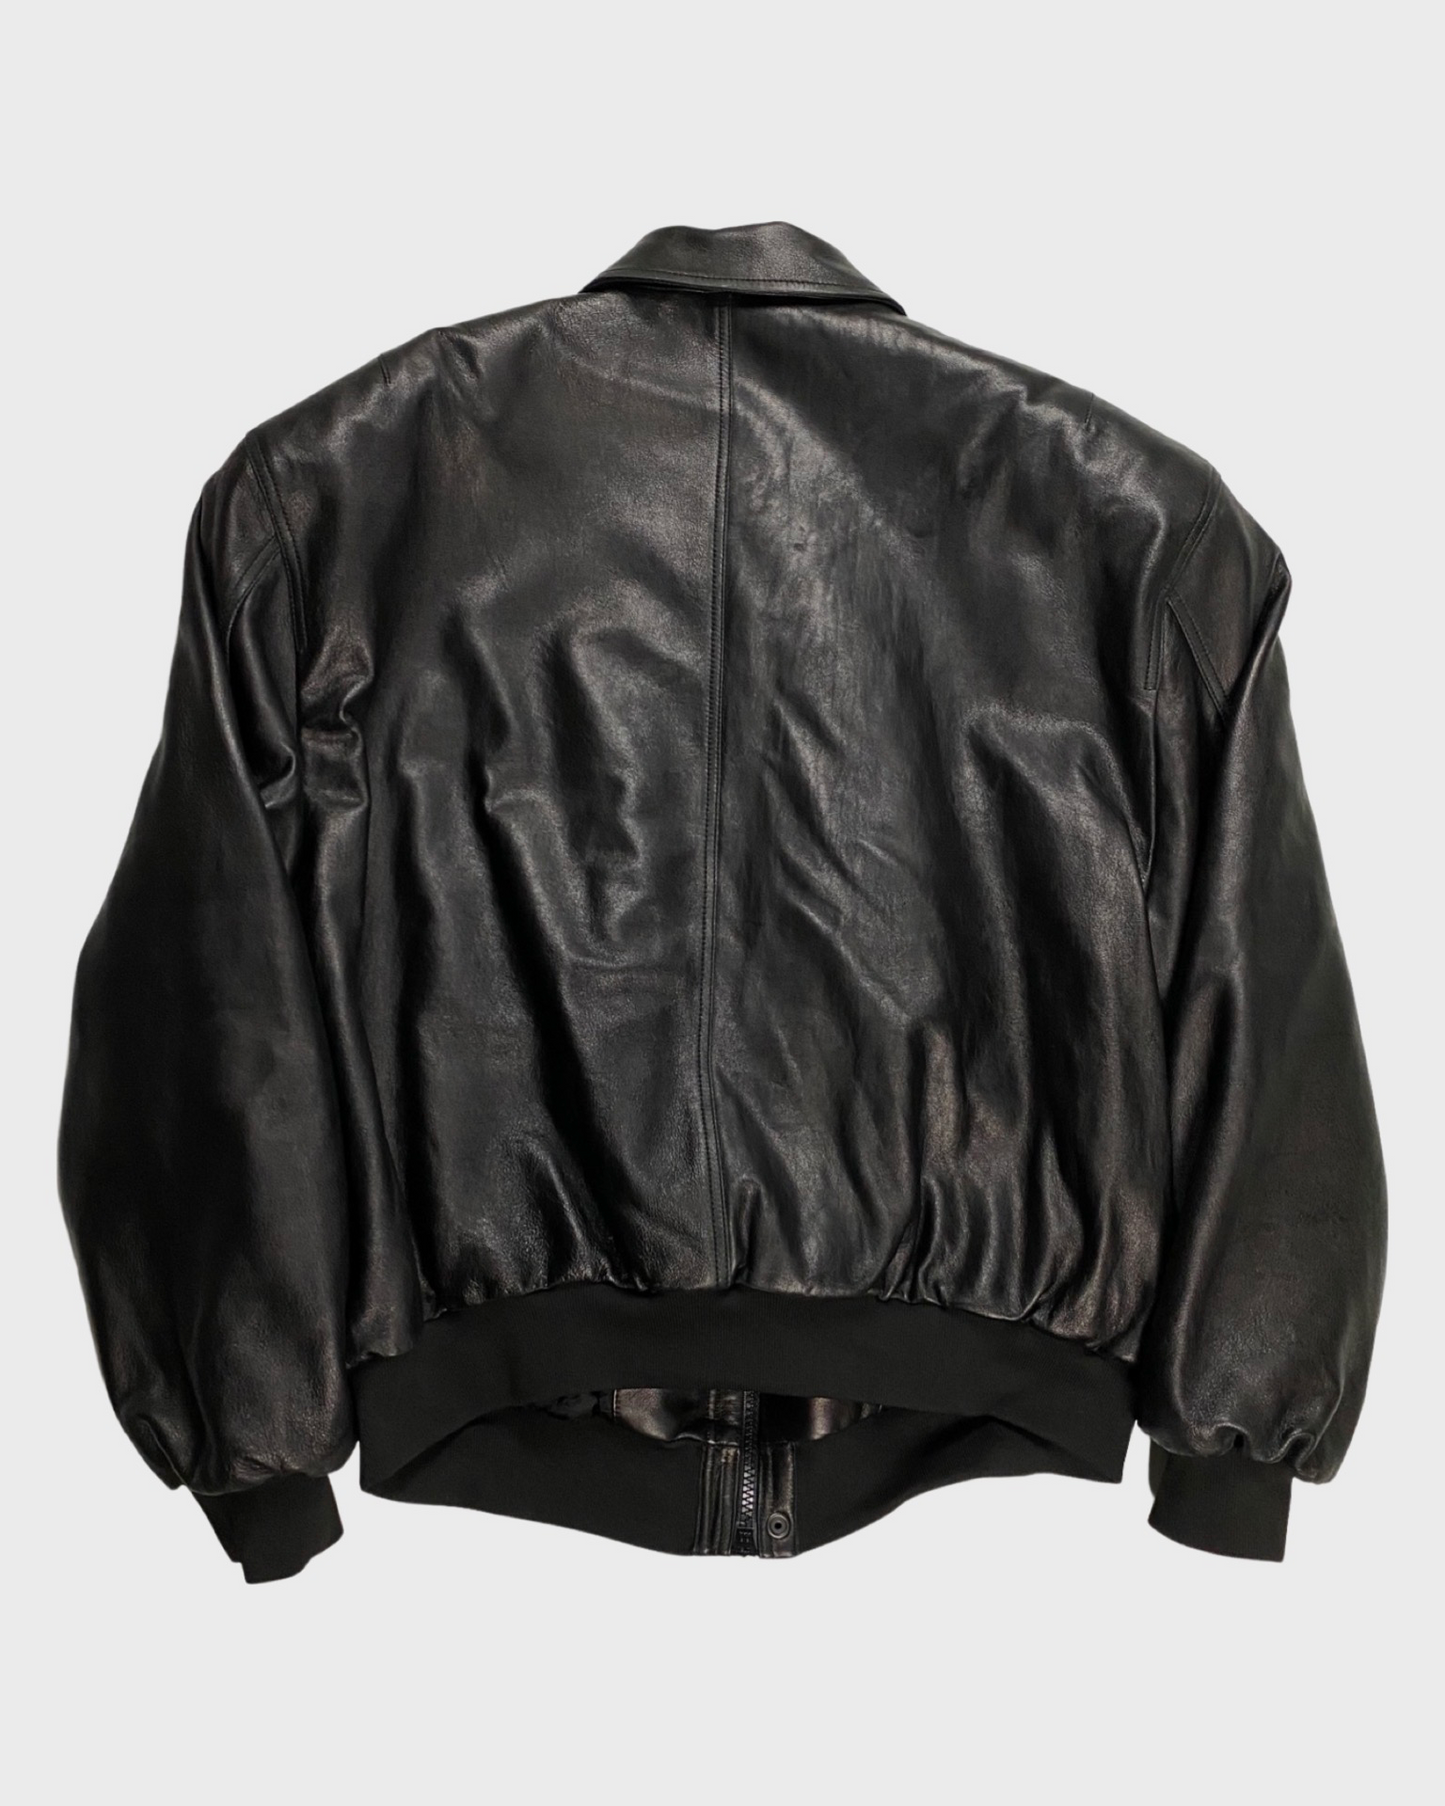 BALENCIAGA Oversized Sporty B Taxi leather jacket SIZE:XS|S